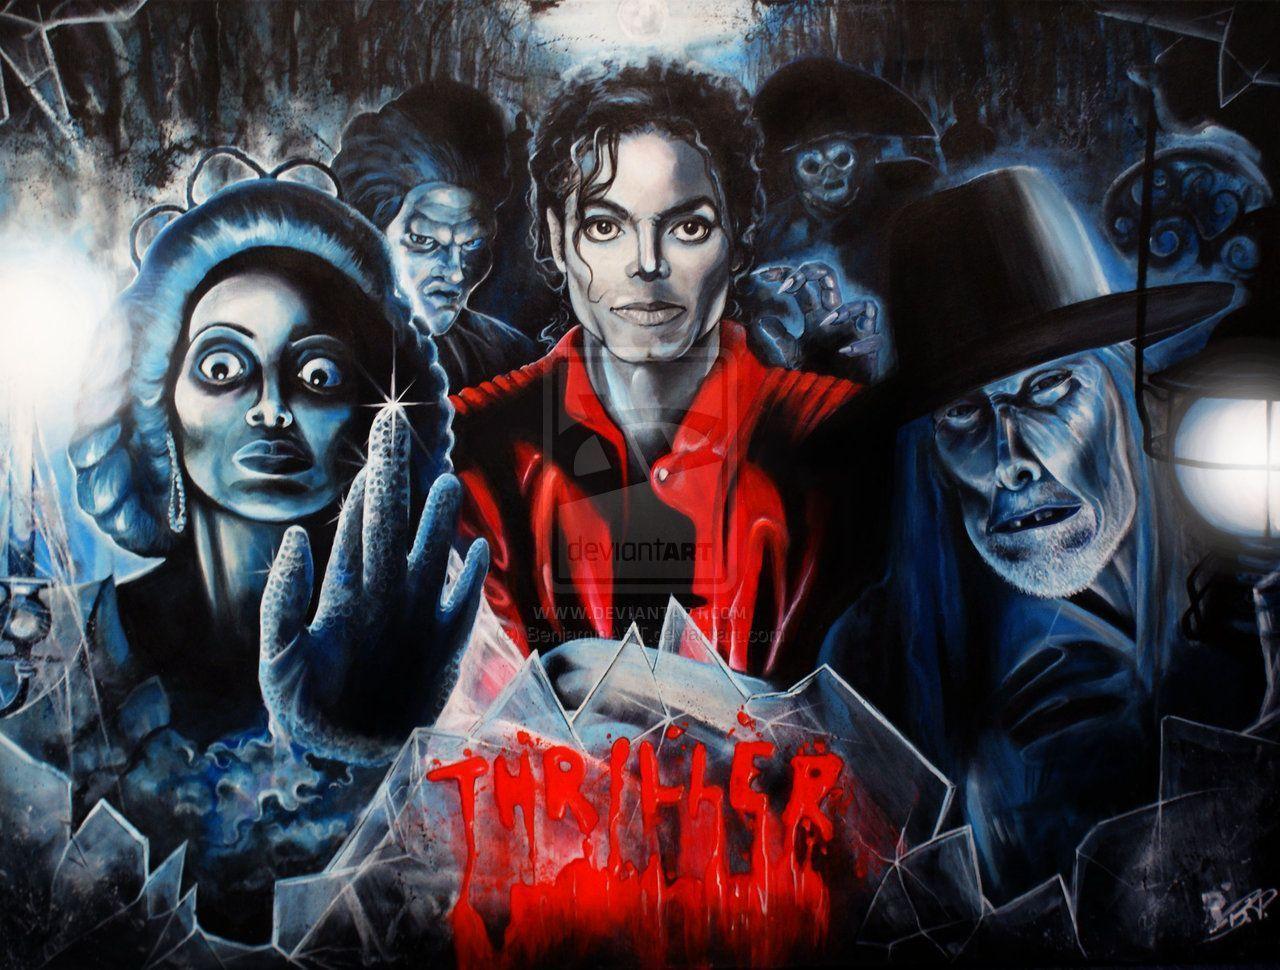 Michael Jackson Thriller Wallpaper Image & Picture